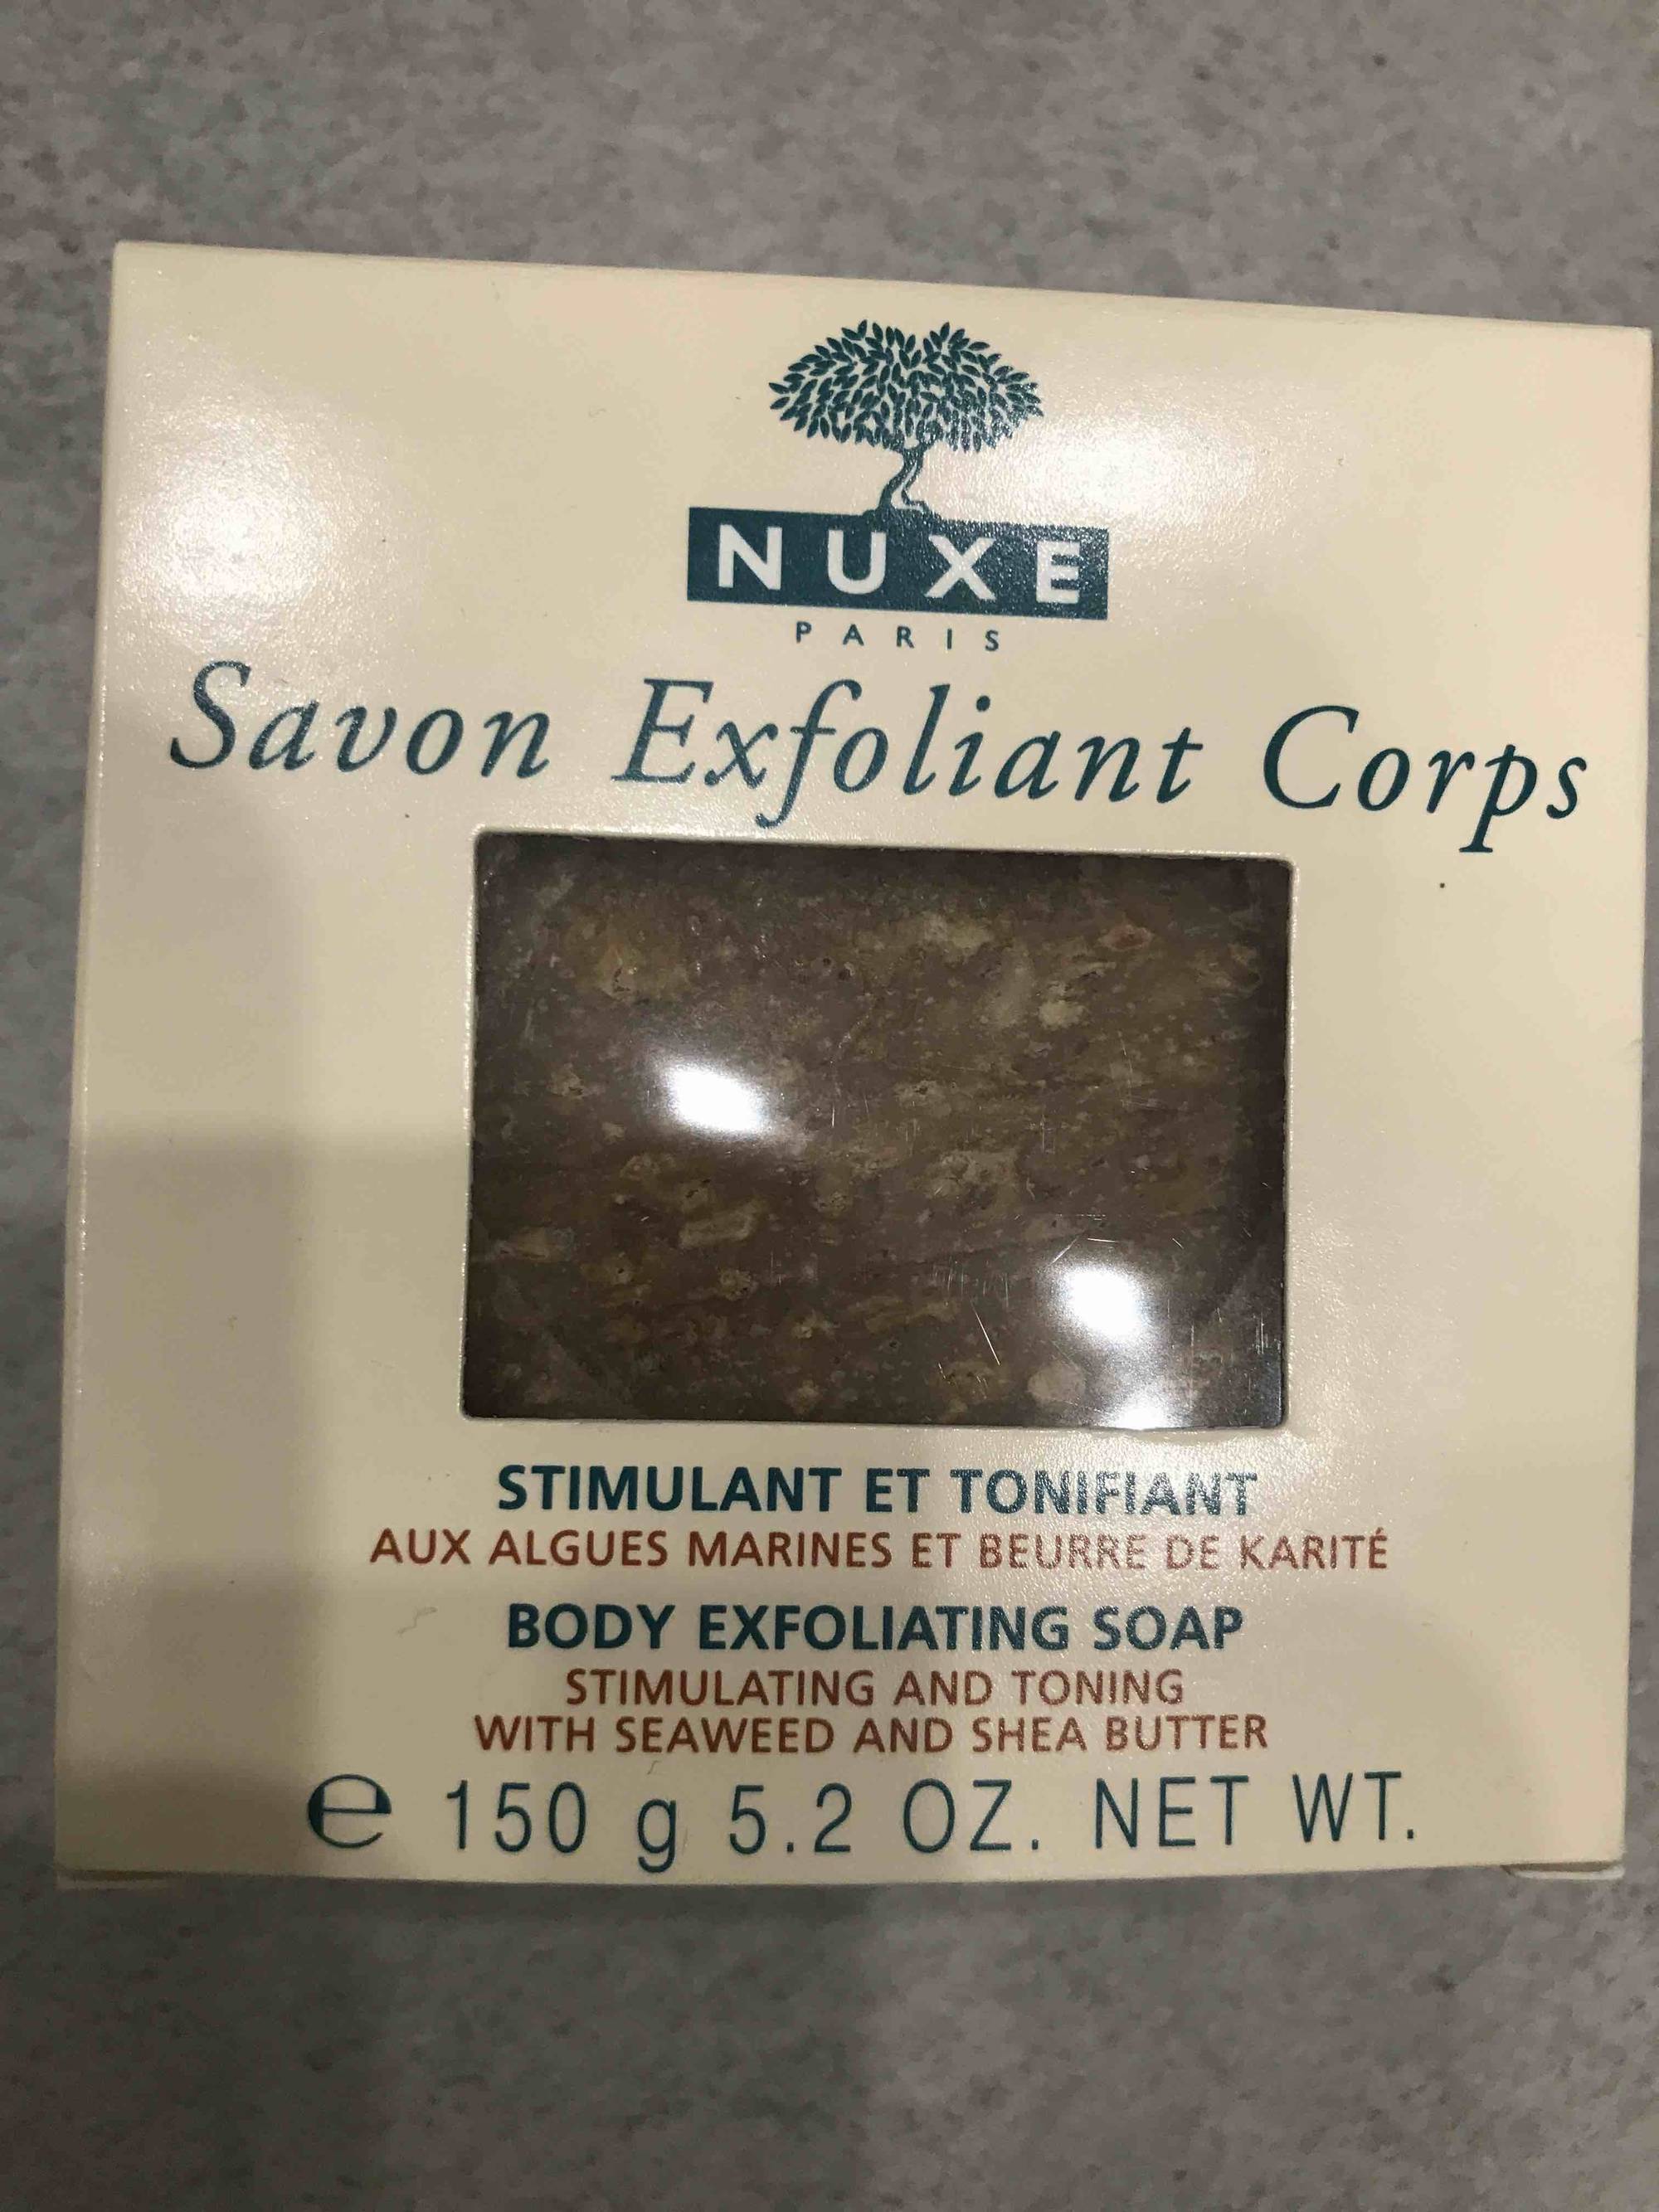 NUXE PARIS - Savon exfoliant corps